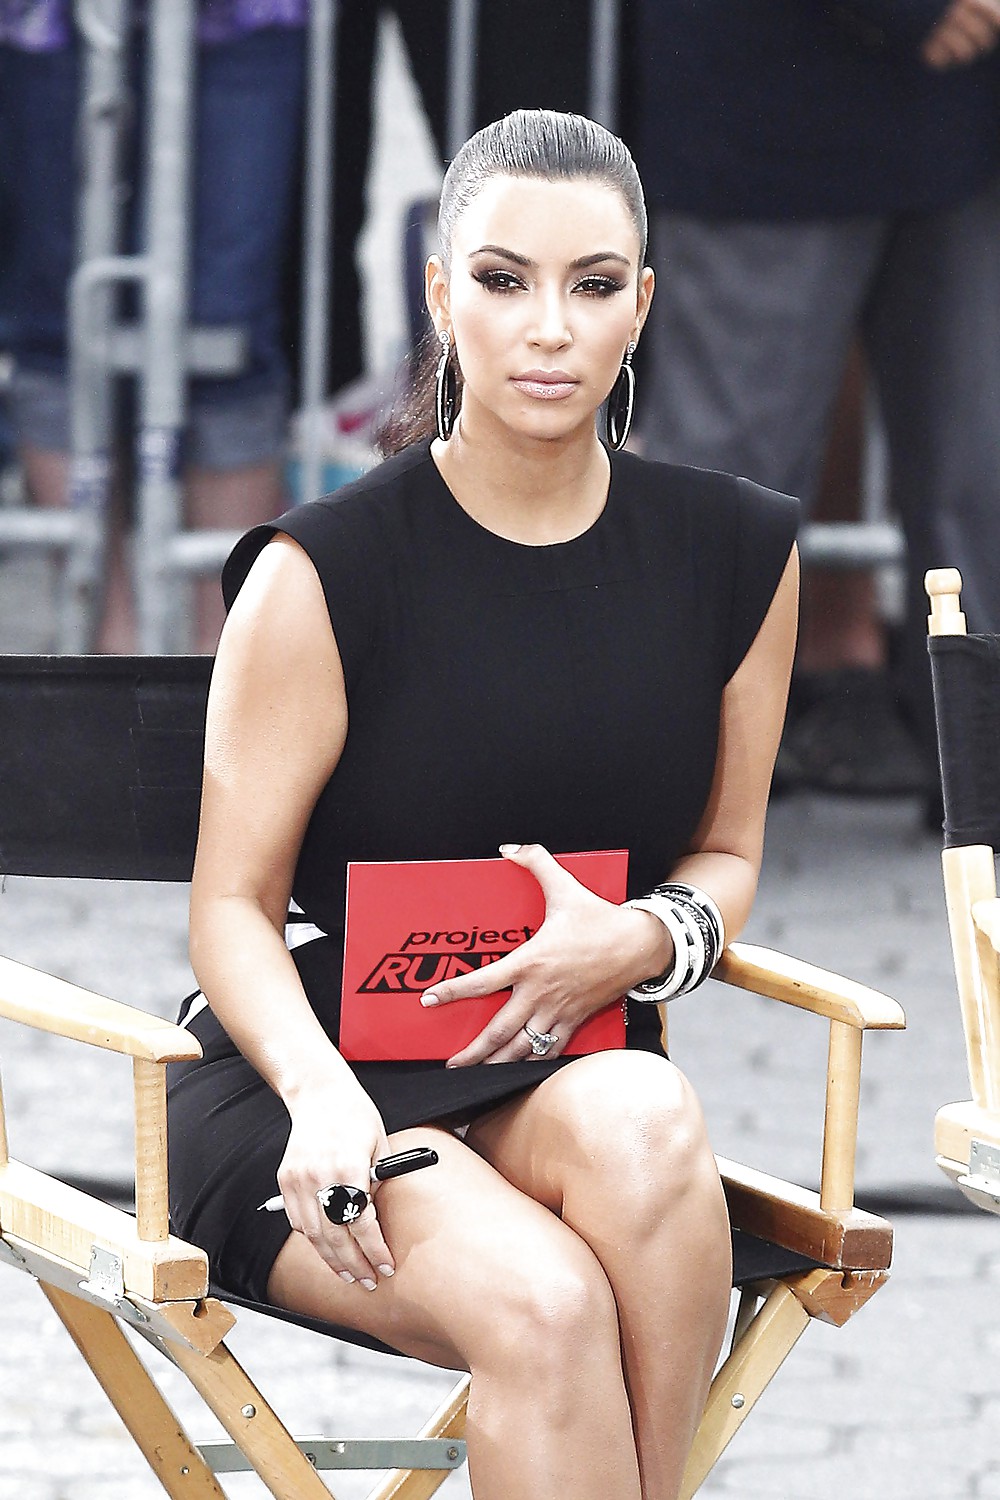 Kim kardashian panty flash mientras filmaba project runway
 #5409959